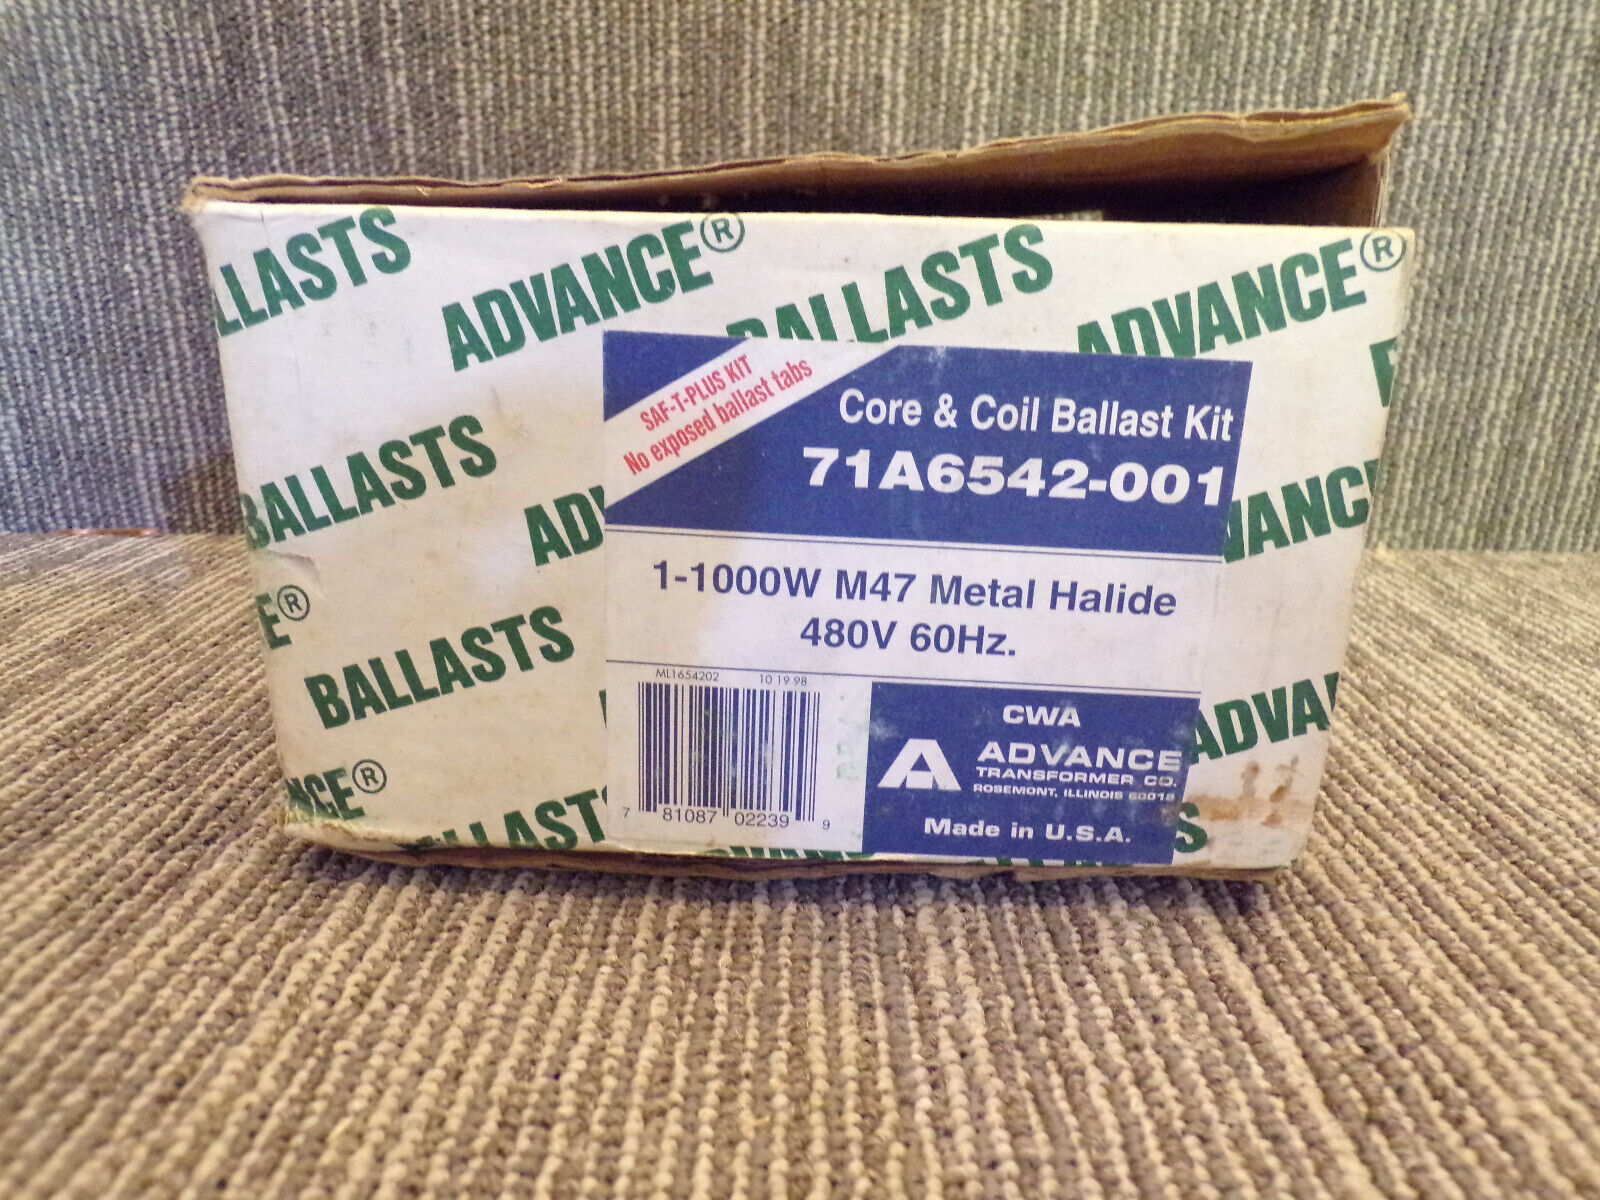 Philips Advance 71A6542-001 Core & Coil Ballast Kit